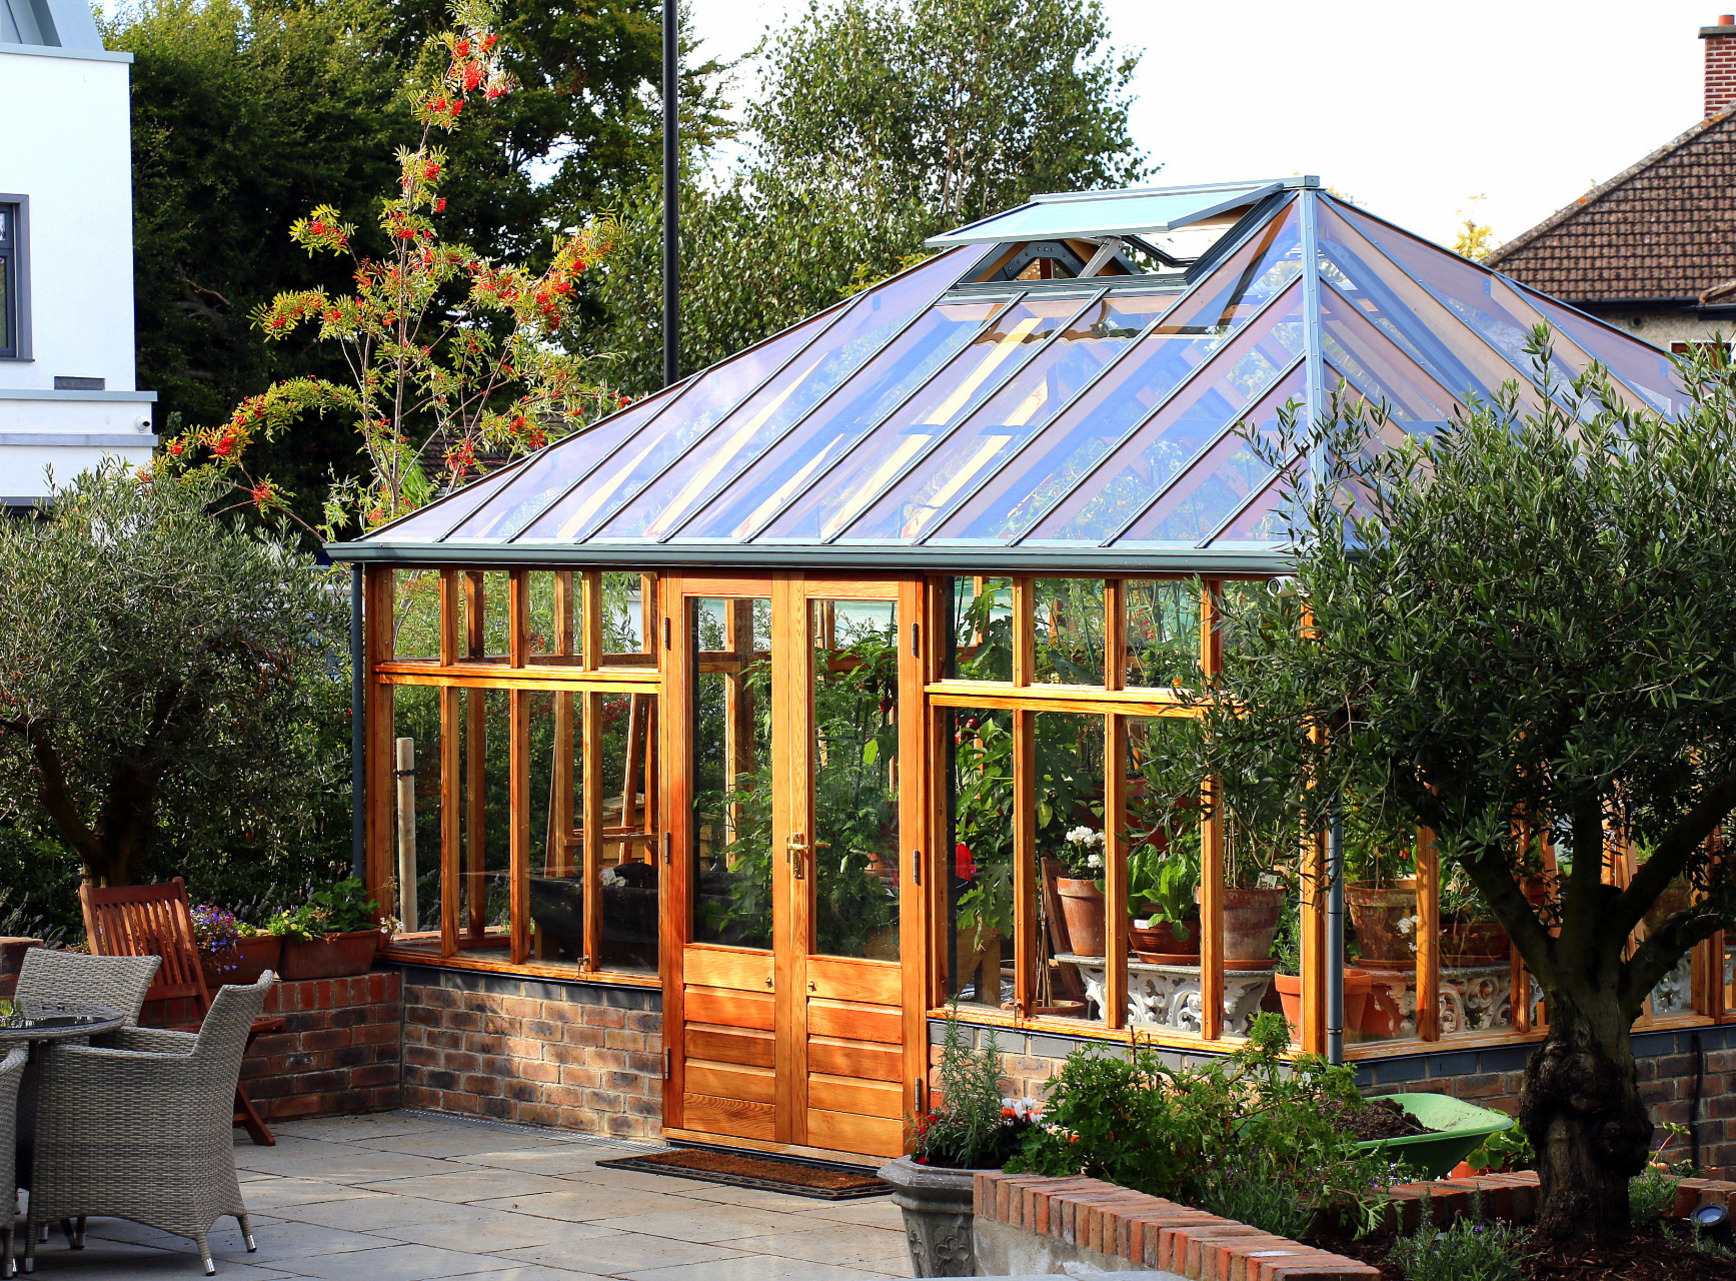 Patio design & construction to complement large Glasshouse in Rathfarnham garden | Owen Chubb Garden Landscapers